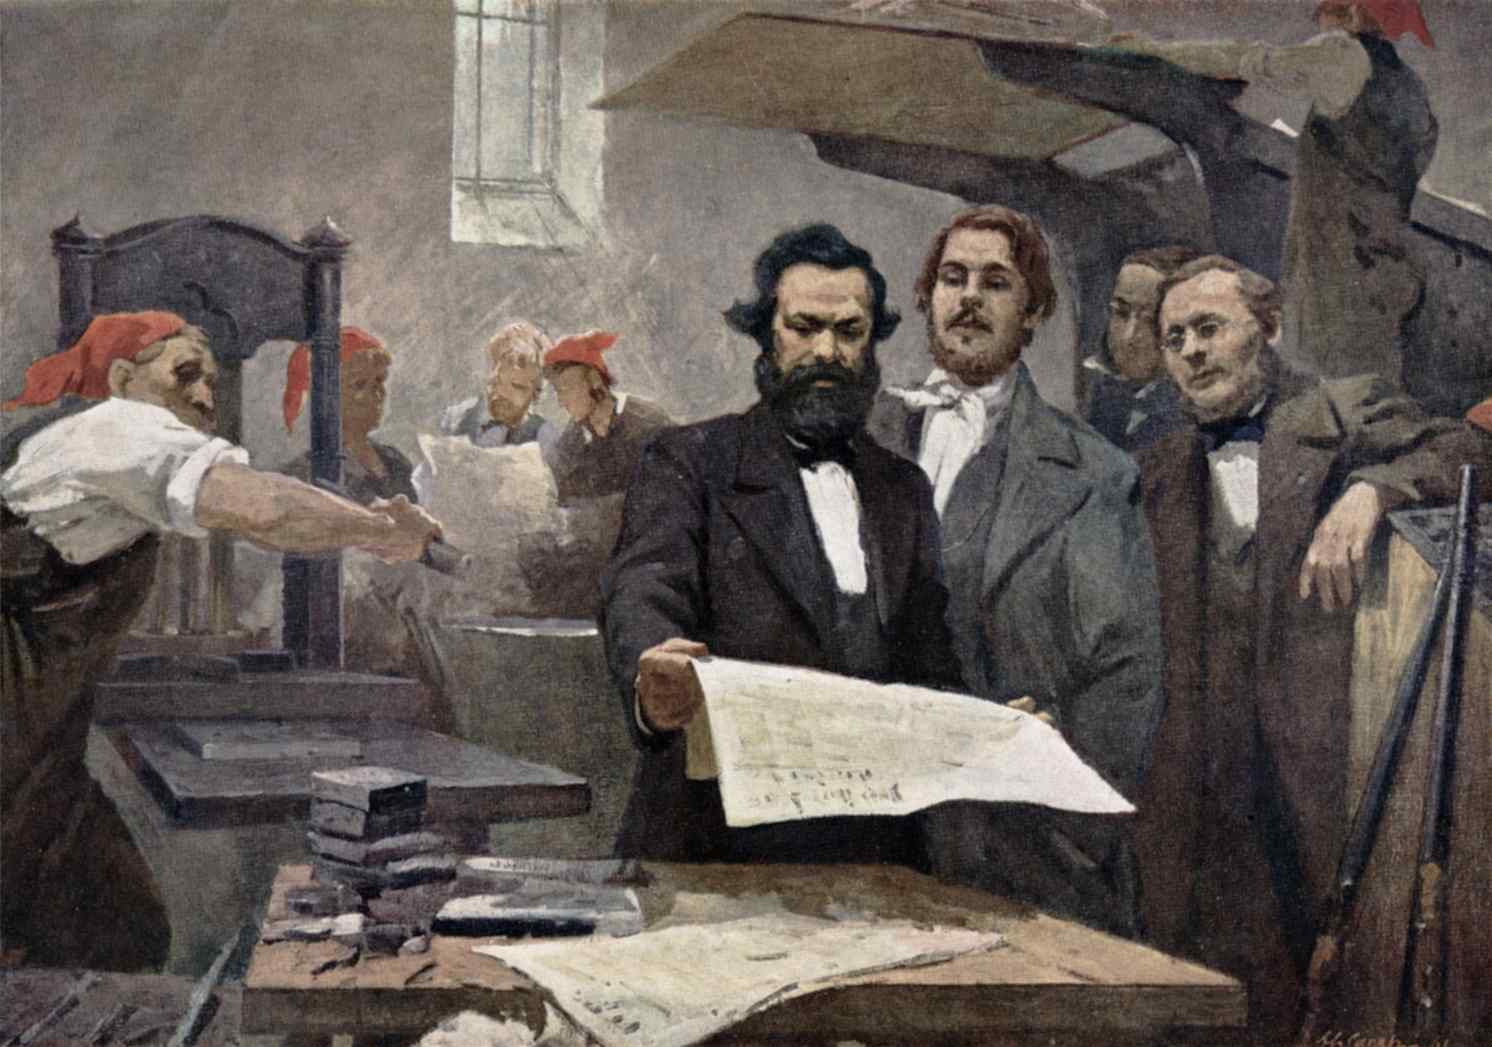 Marx and Engels at the Rheinische Zeitung Image public domain